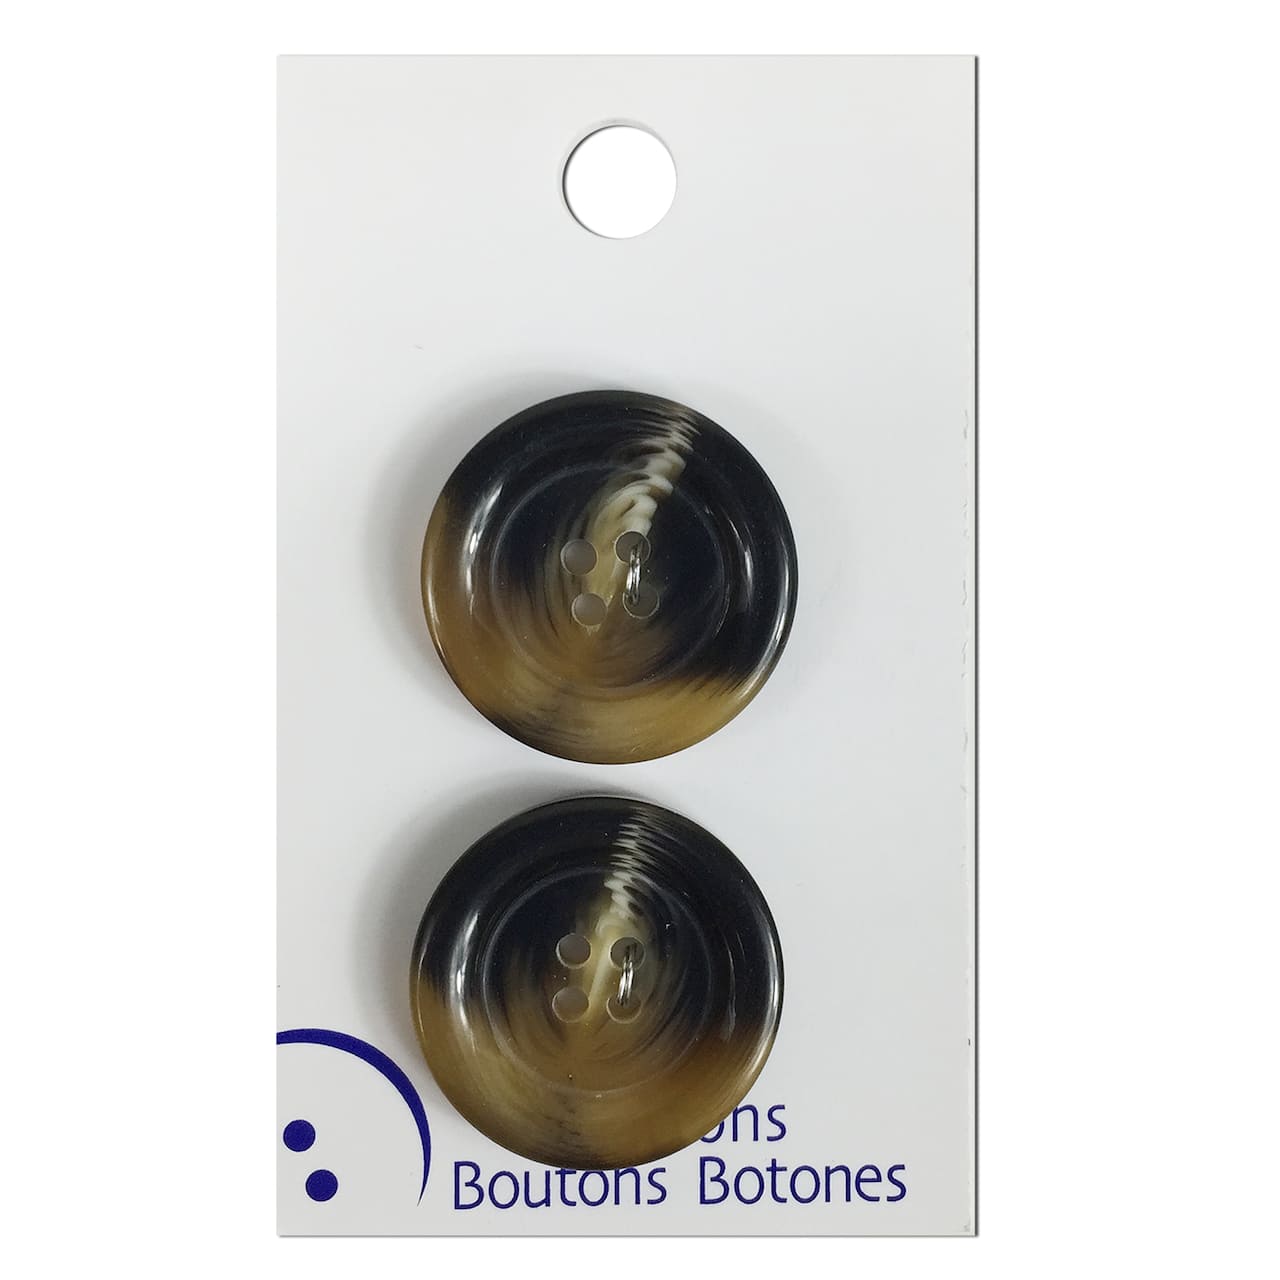 Blumenthal Lansing Tortoise Buttons, 2 Pack